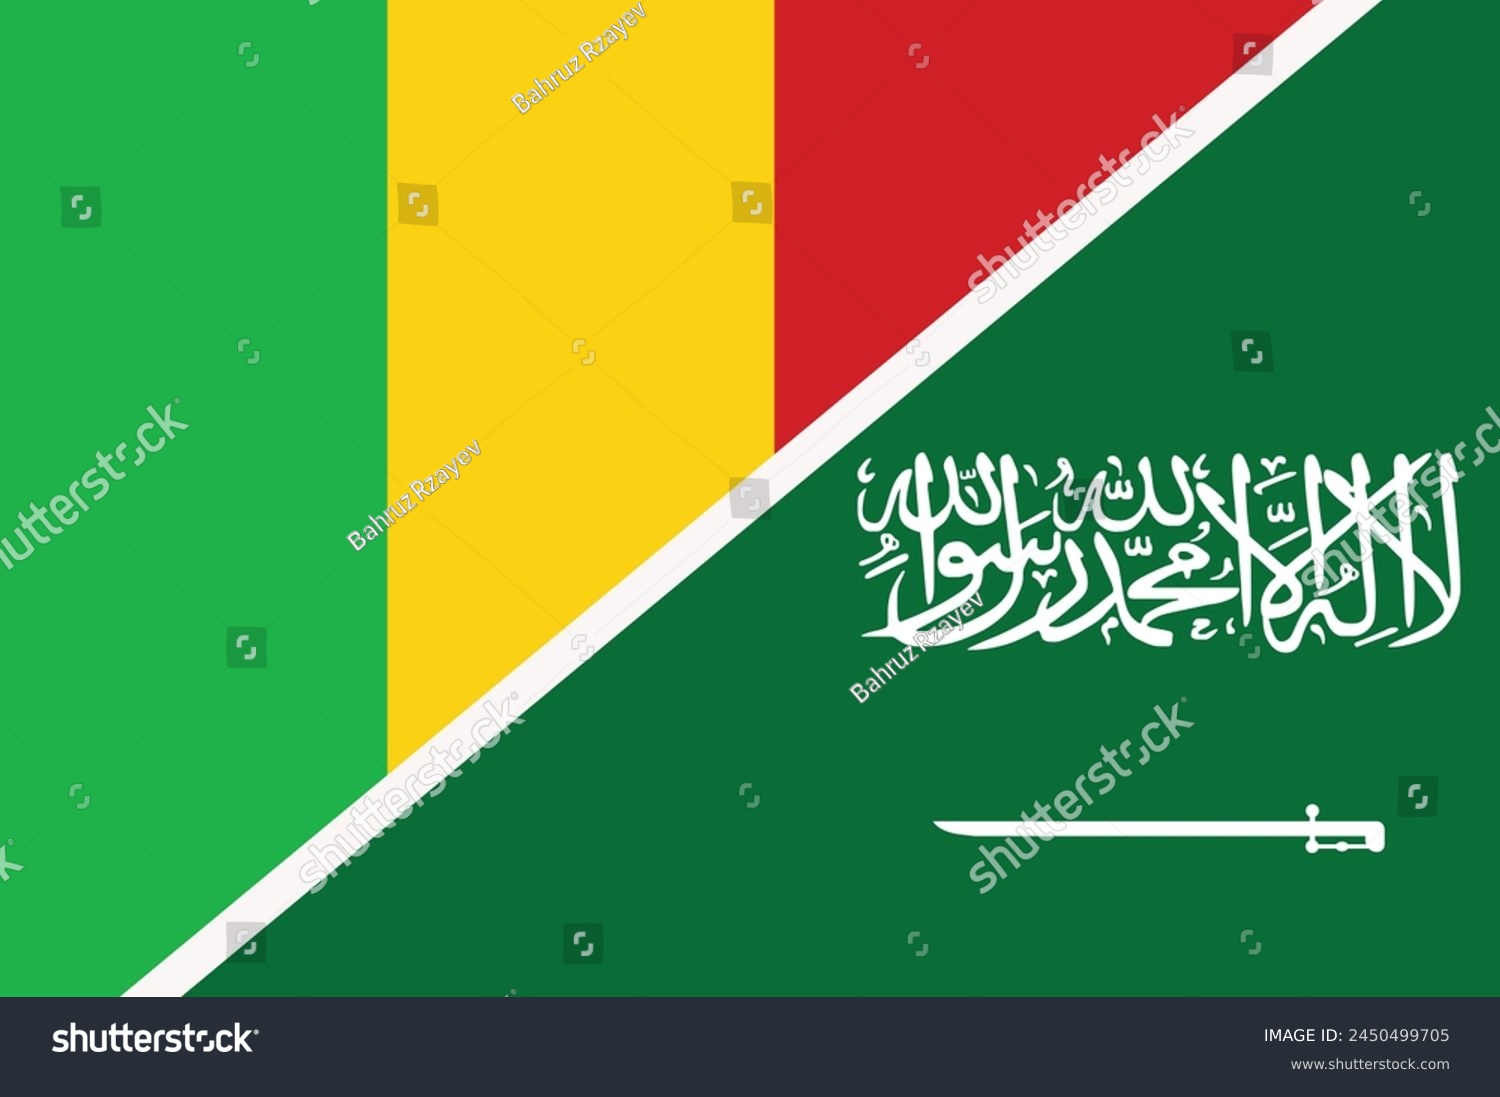 SVG of Flag of Mali and Saudi Arabia concept graphic element Illustration template design
 svg